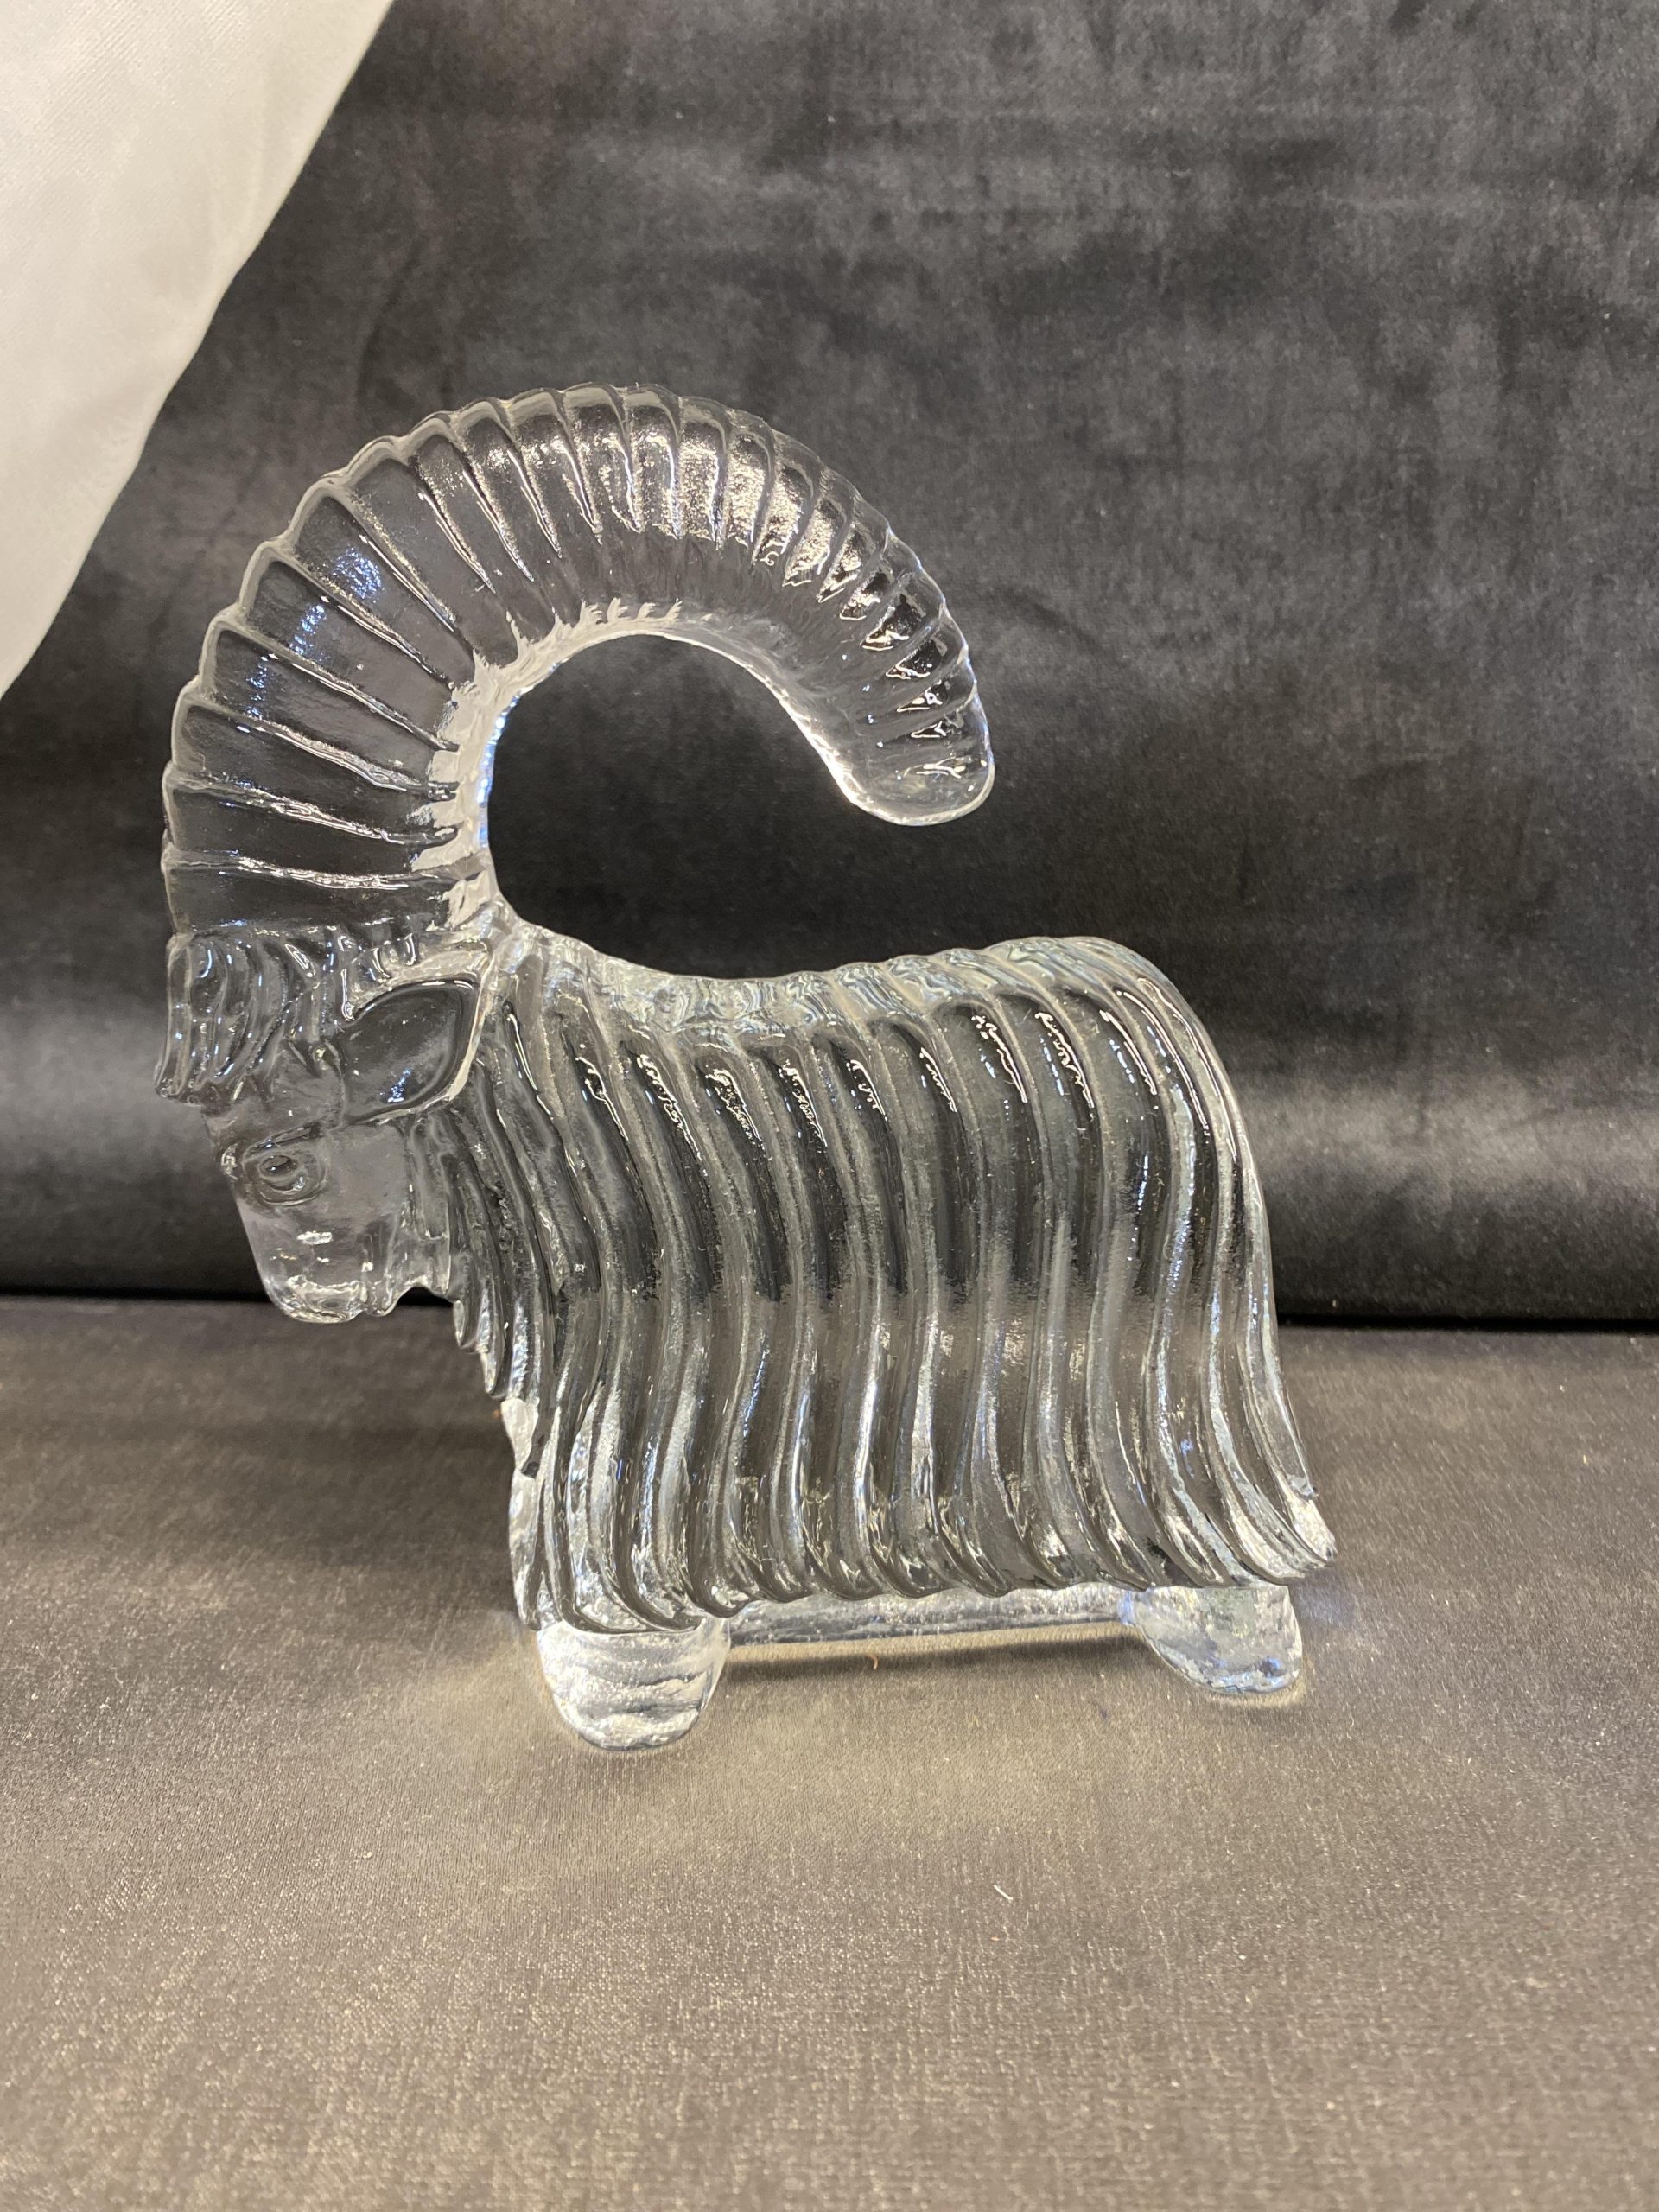 Boda Zoo Glass Figurine – Large Ram